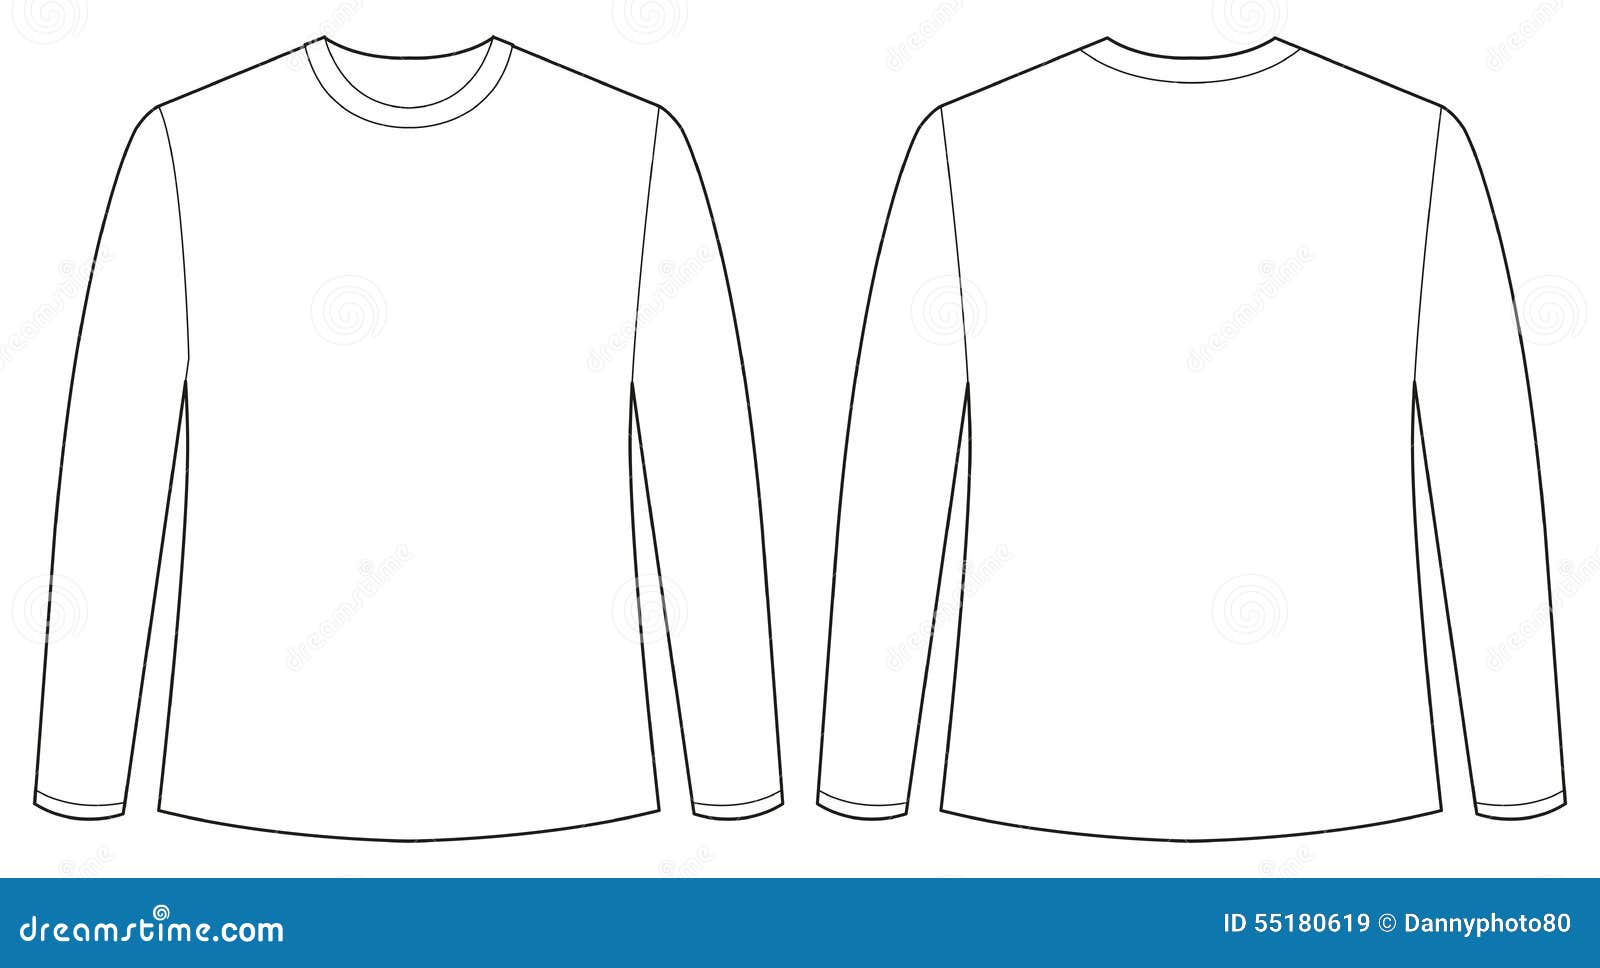 Longsleeves shirt stock illustration. Illustration of classic - 55180619